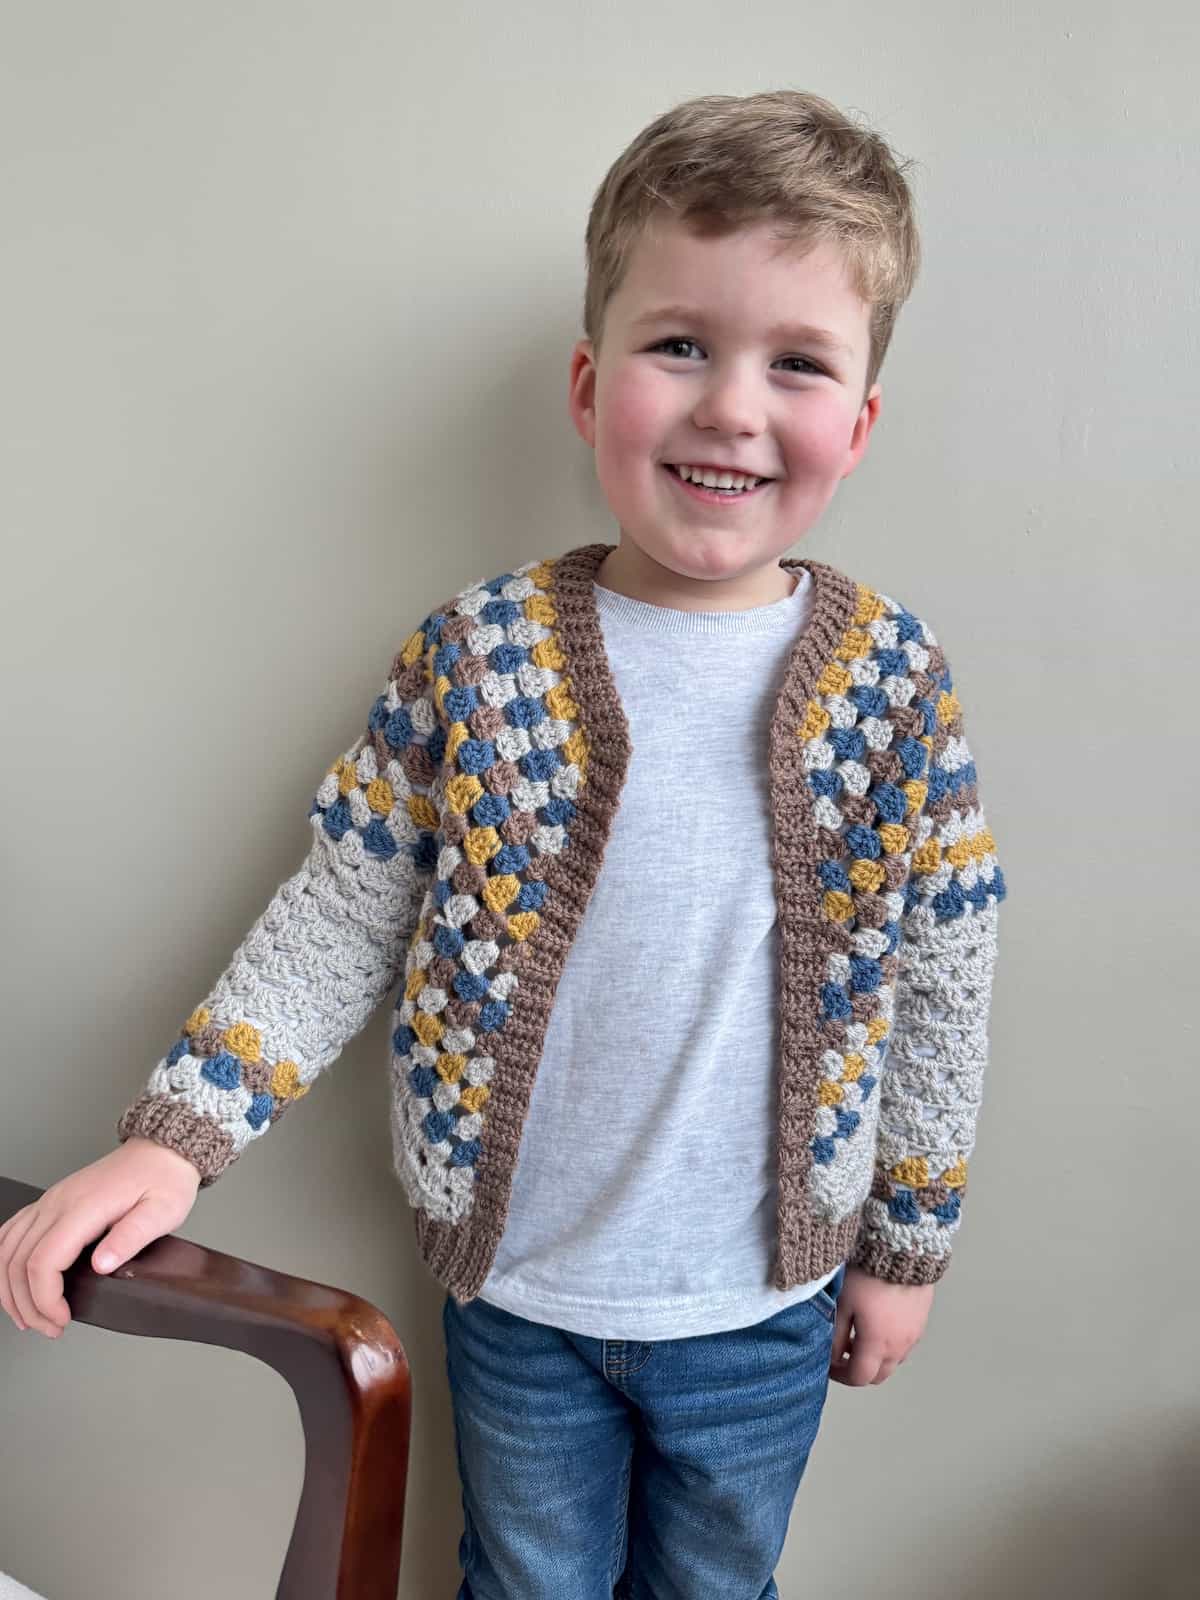 A young boy wearing a crochet cardigan in granny stitch.